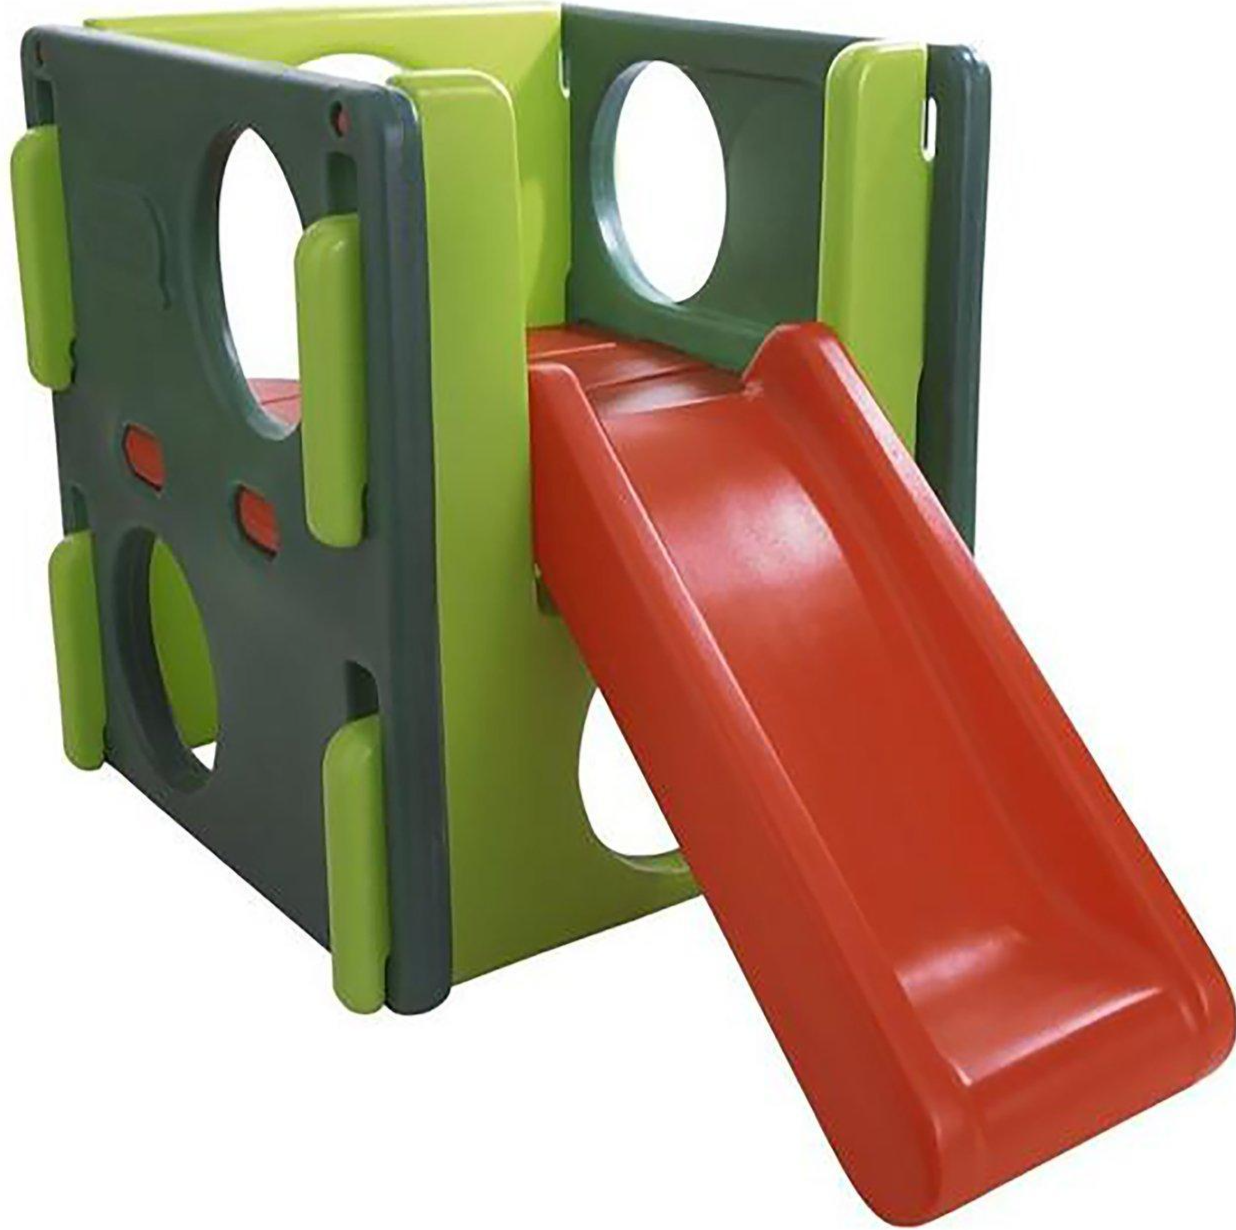 UK Water Children's Slide Tikes Kids Toddler Play Toy Playground Climbing 